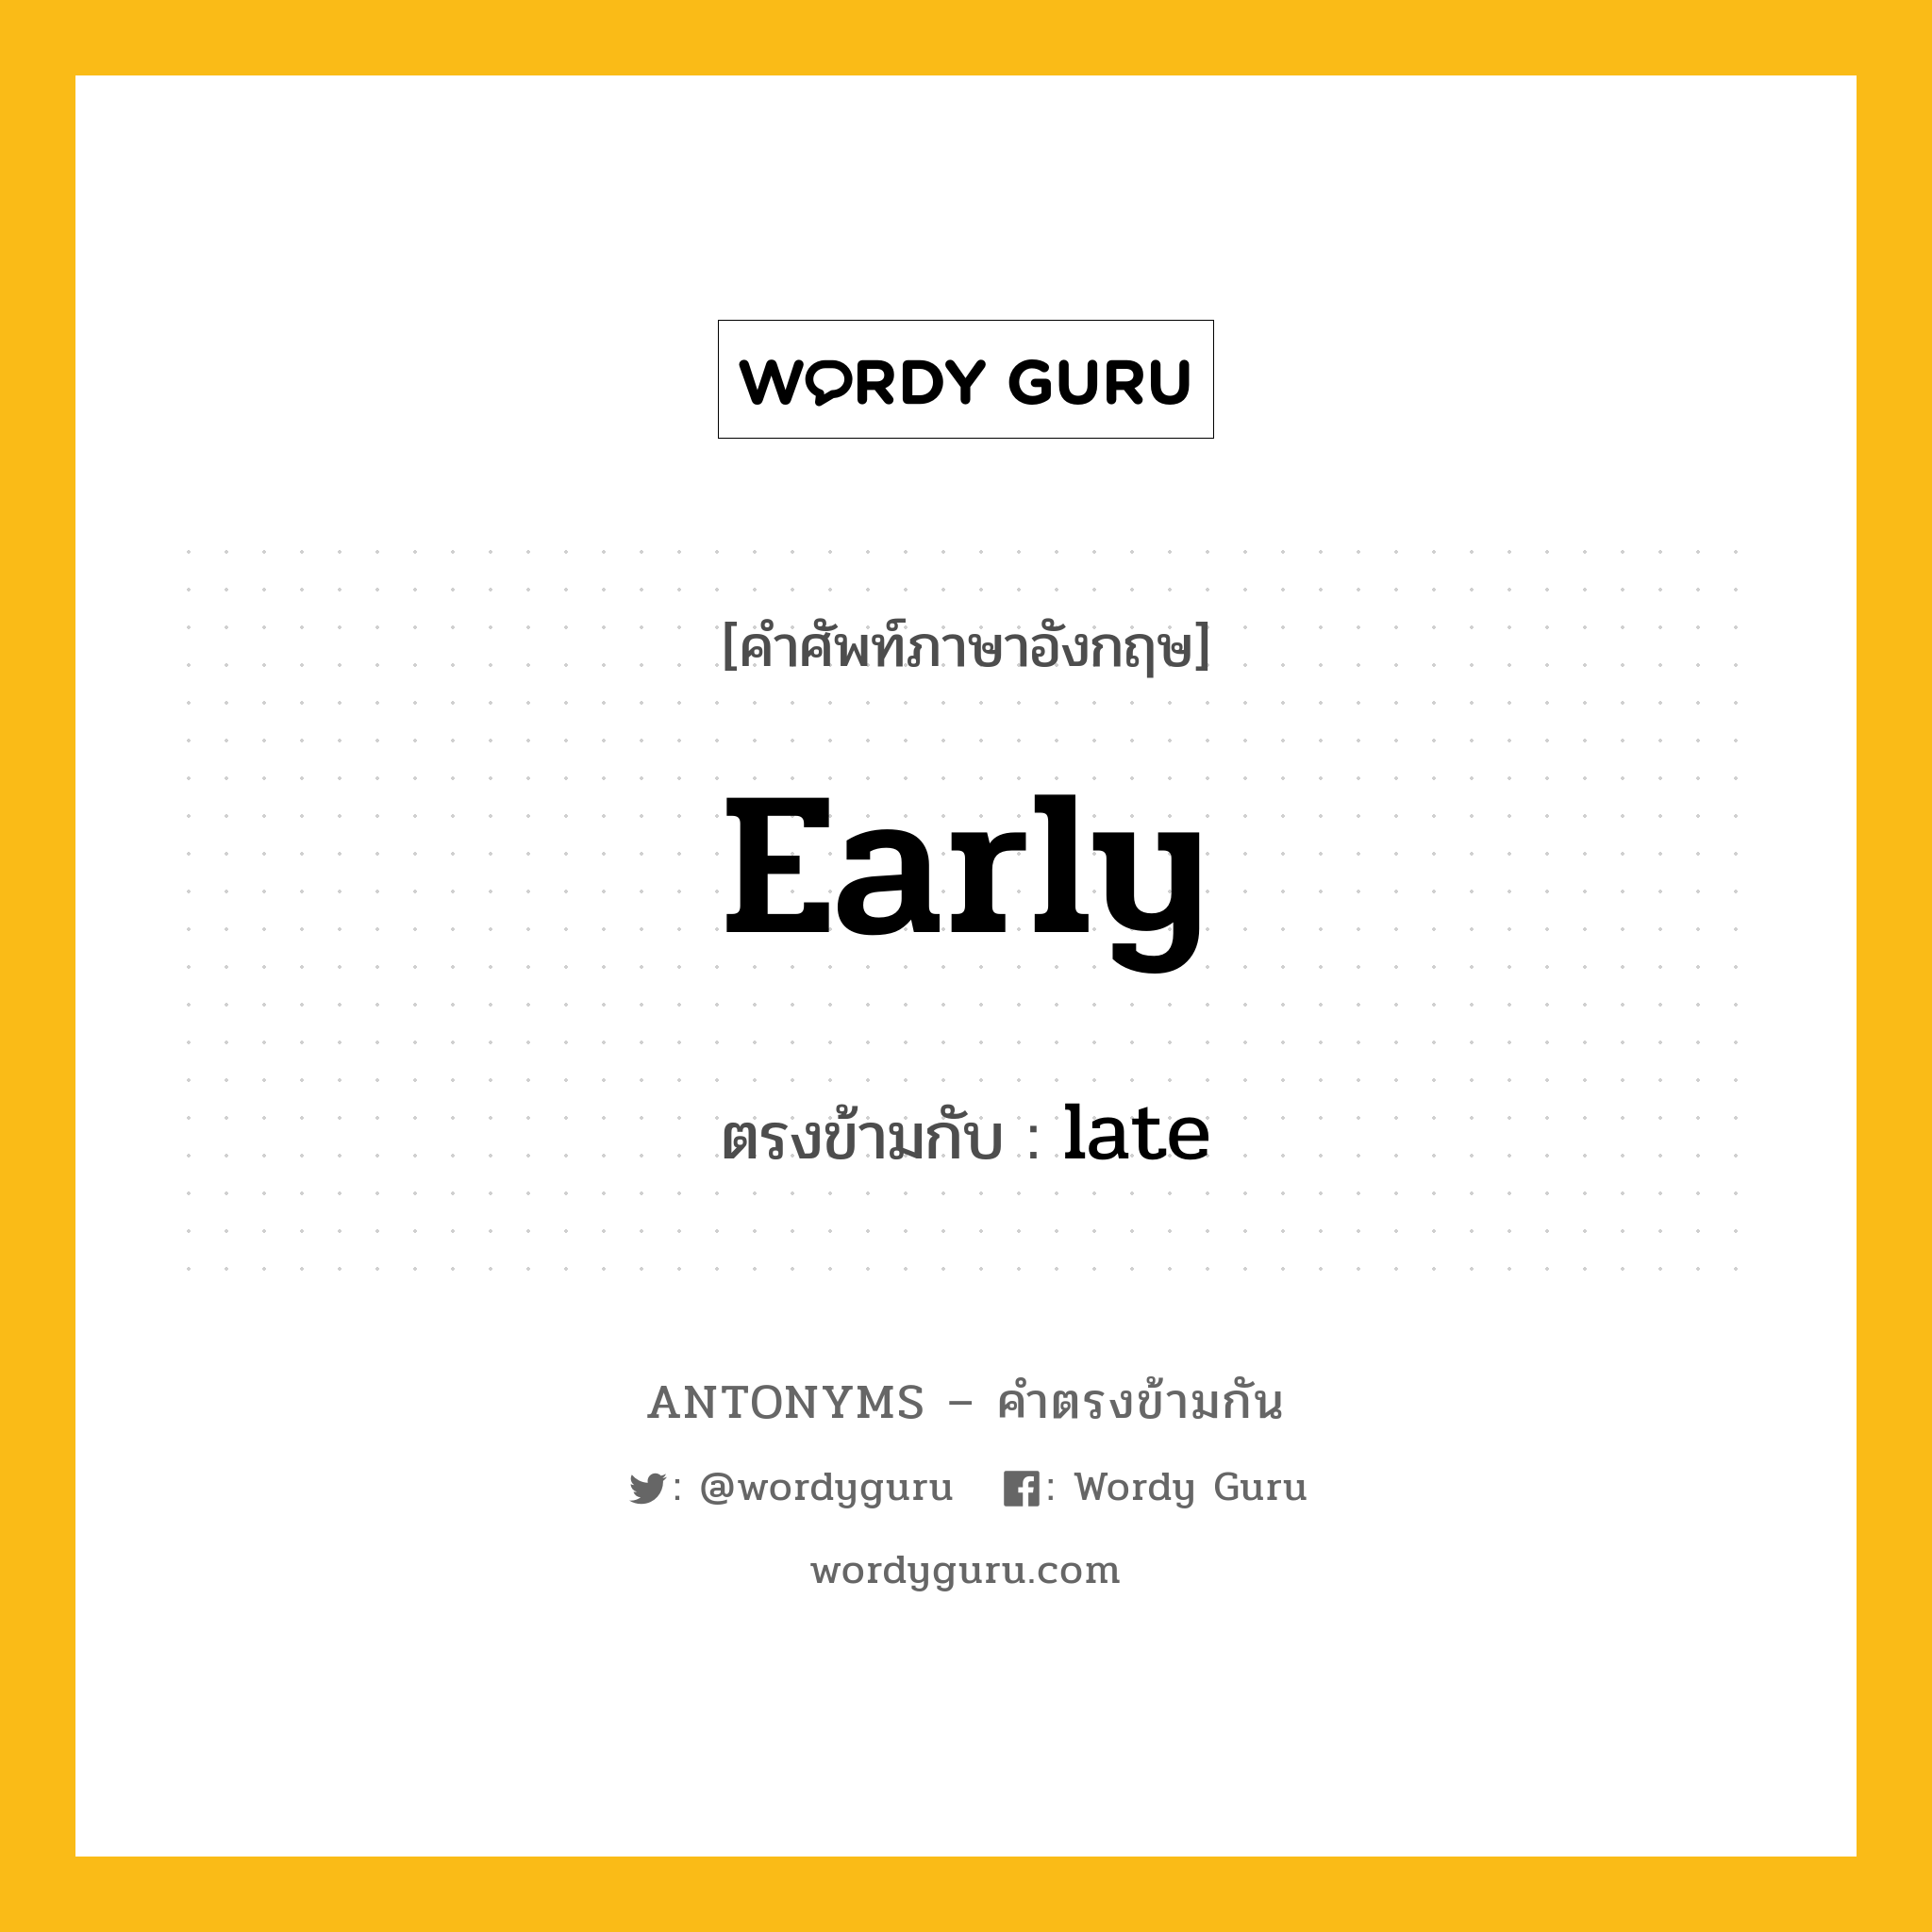 early เป็นคำตรงข้ามกับคำไหนบ้าง?, คำศัพท์ภาษาอังกฤษ early ตรงข้ามกับ late หมวด late